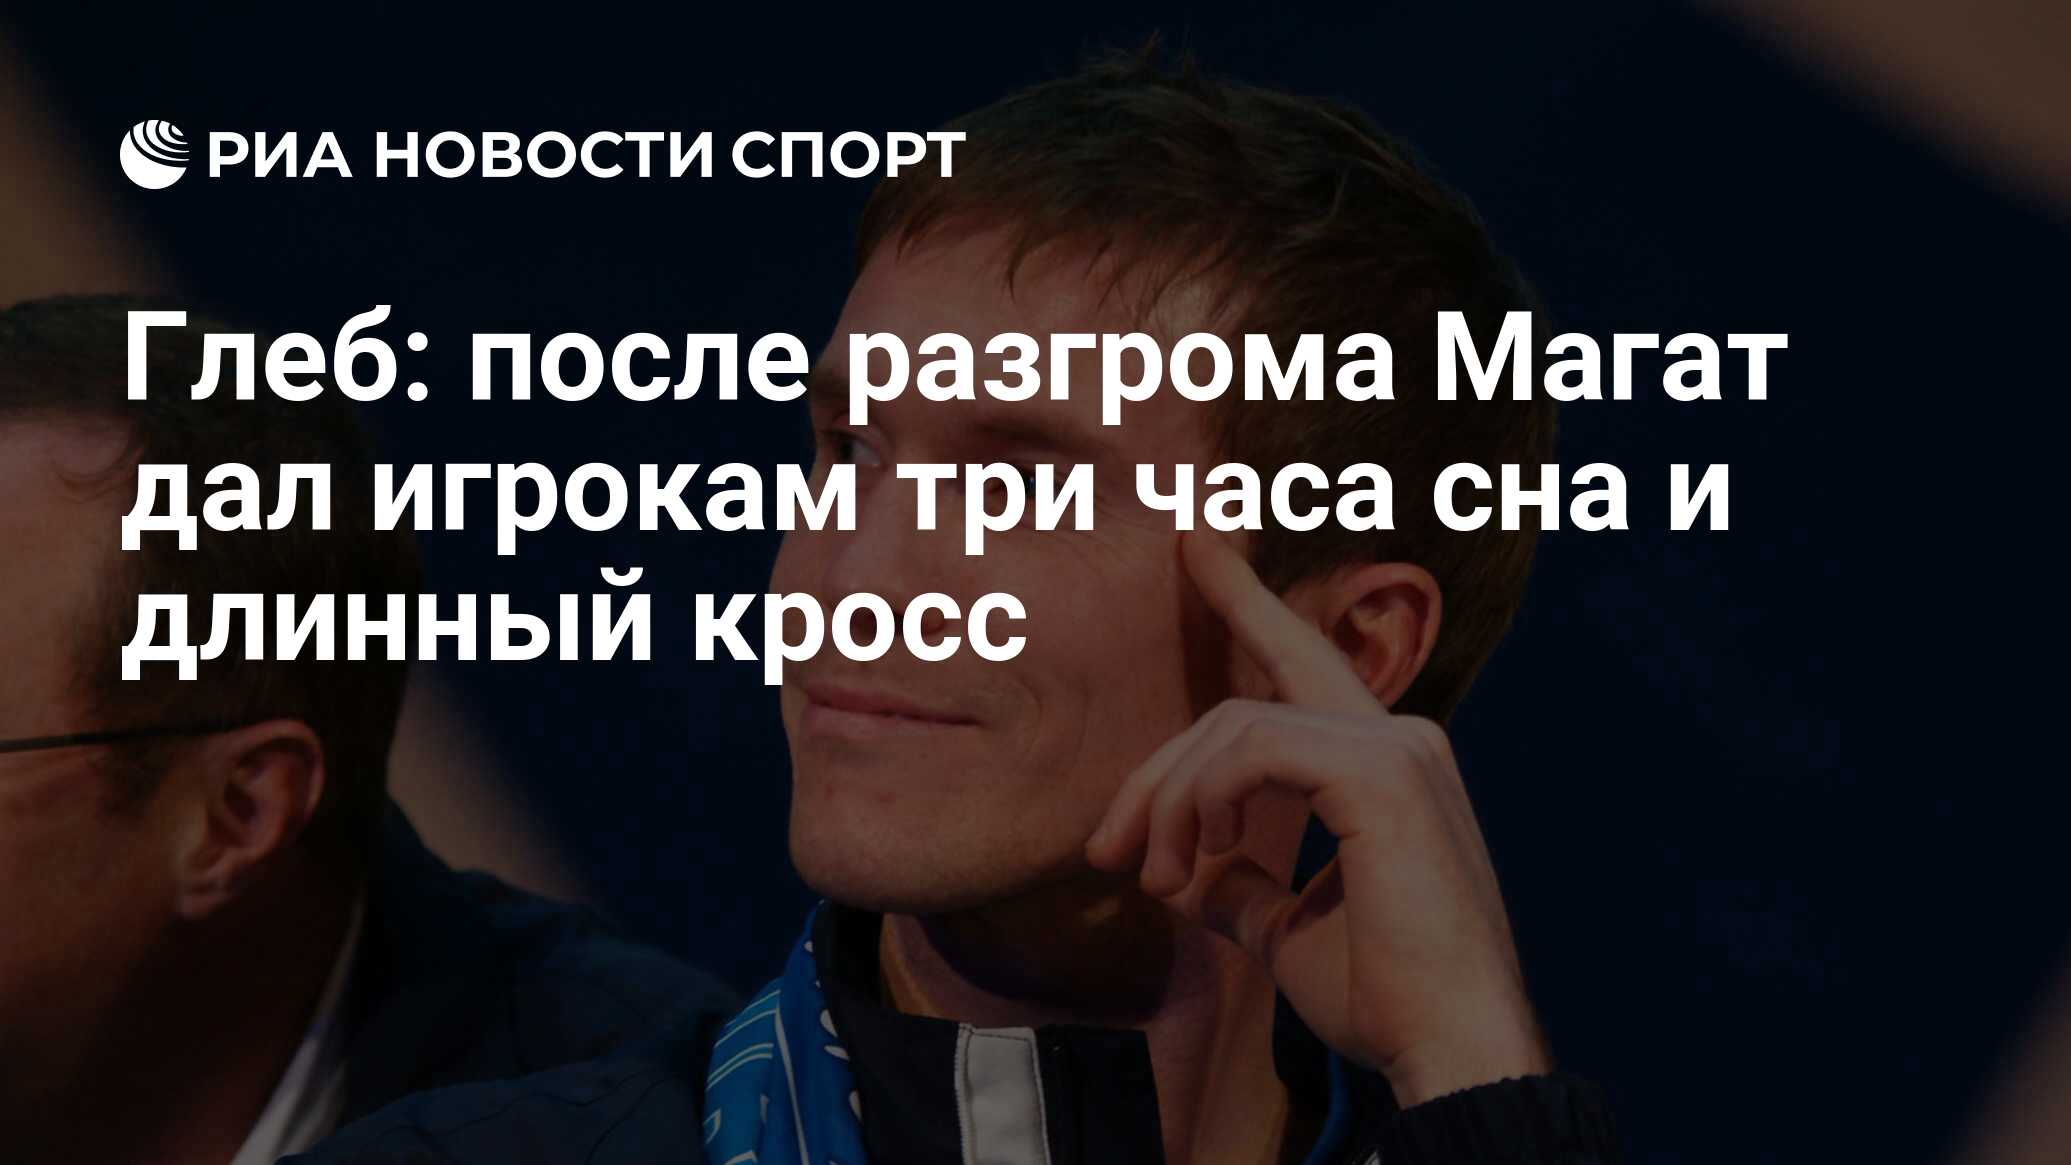 Глеб: после разгрома Магат дал игрокам три часа сна и длинный кросс - РИА  Новости Спорт, 29.02.2016